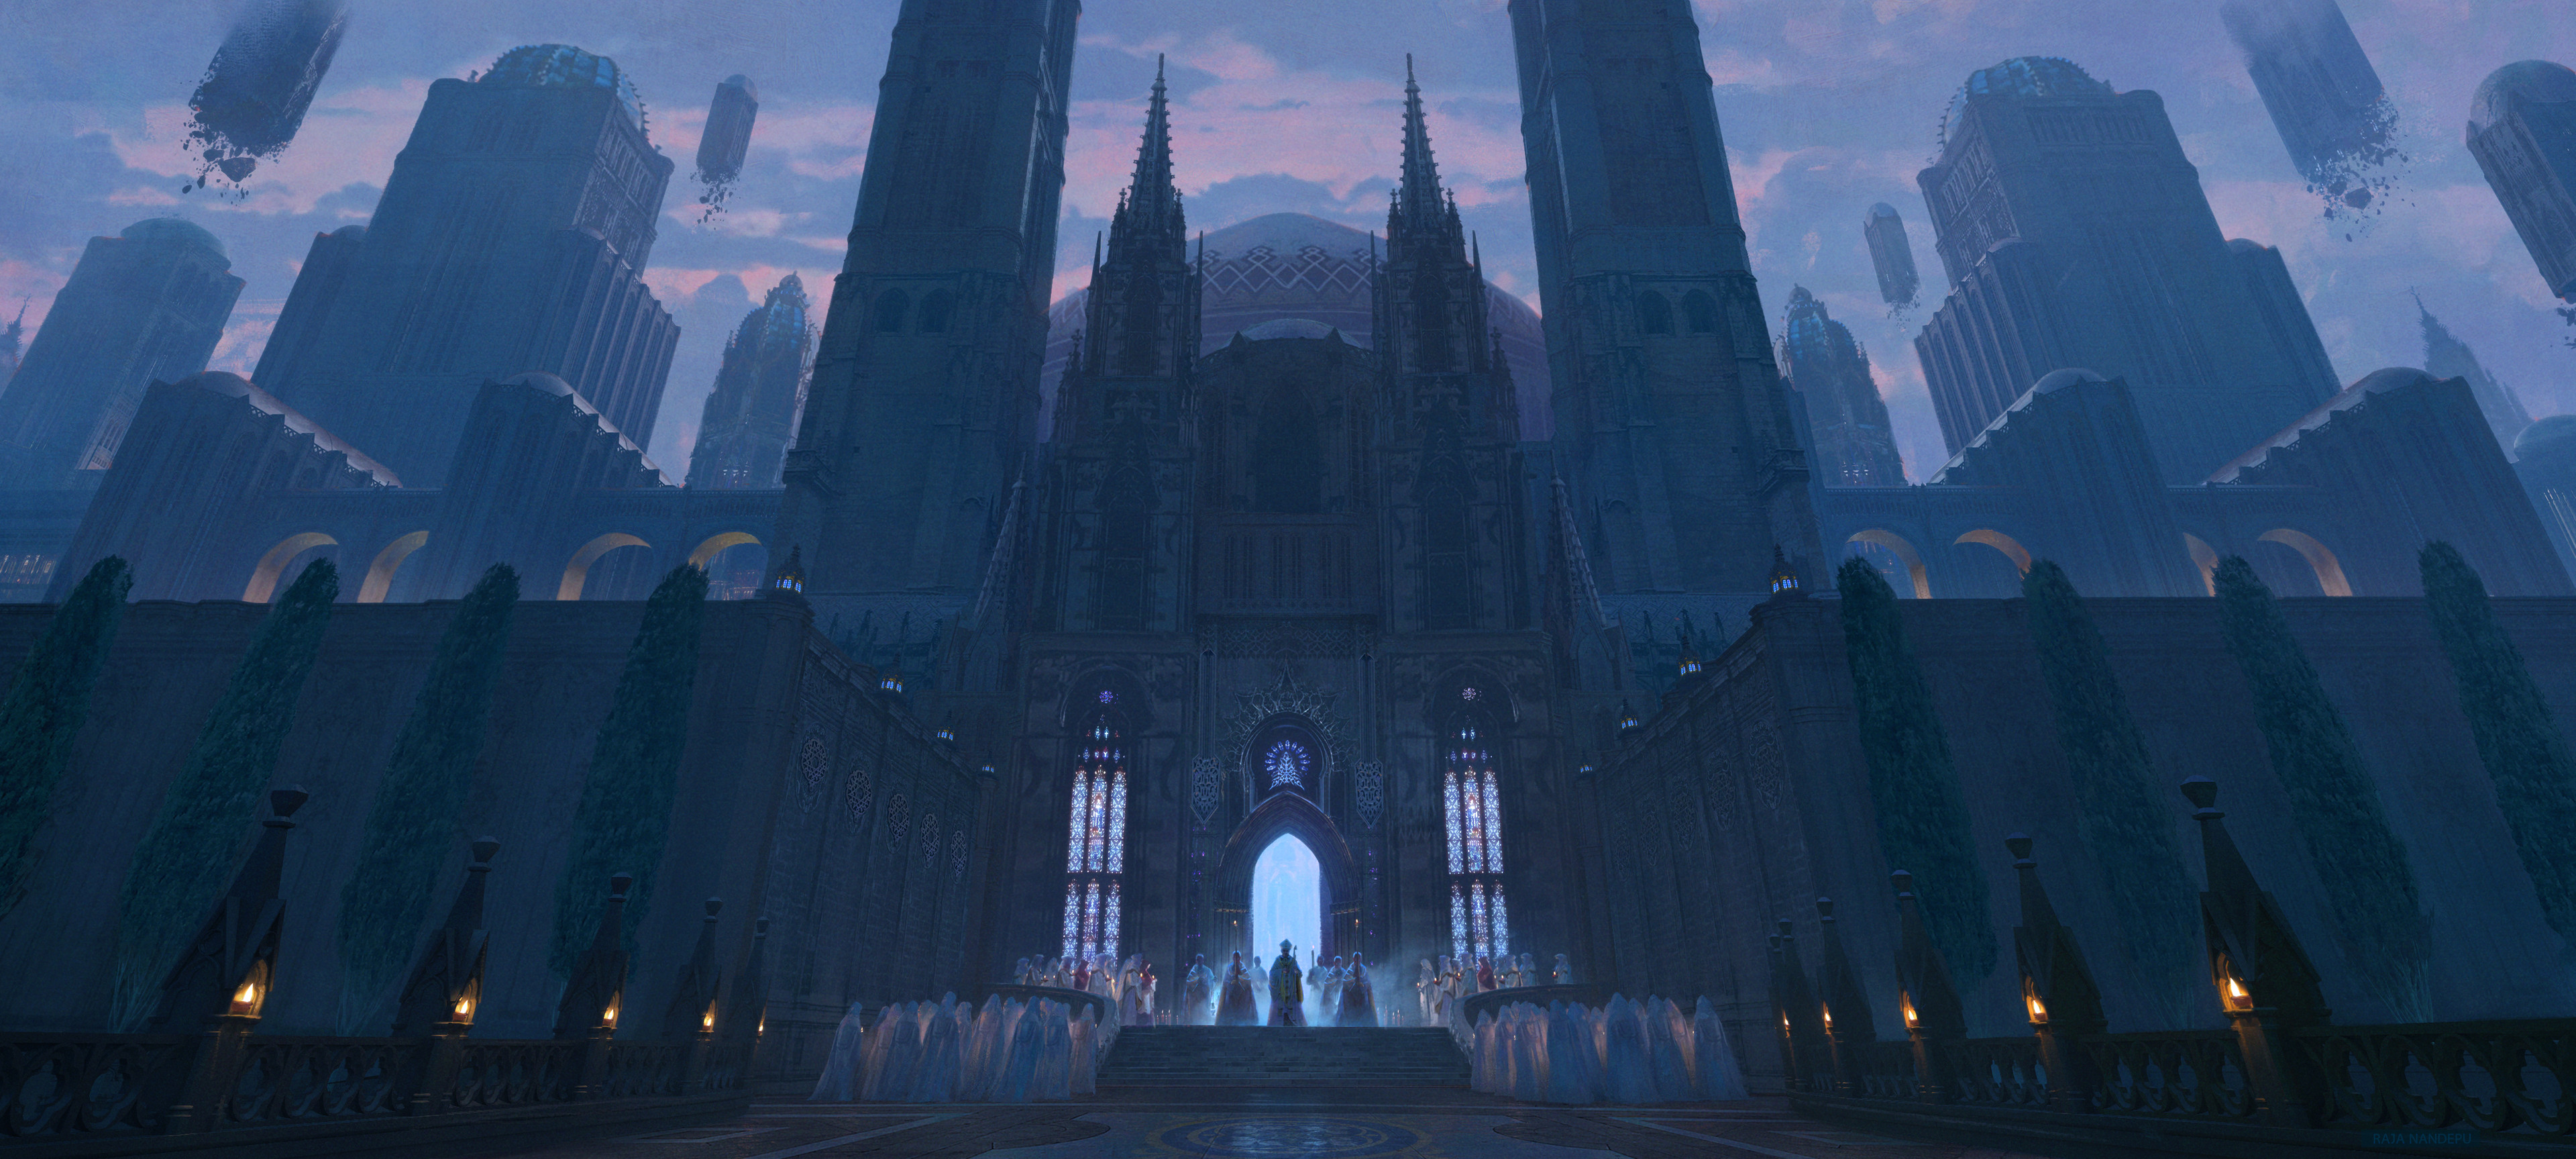 Artwork Digital Art Cathedral Fantasy Architecture Priest 3840x1727